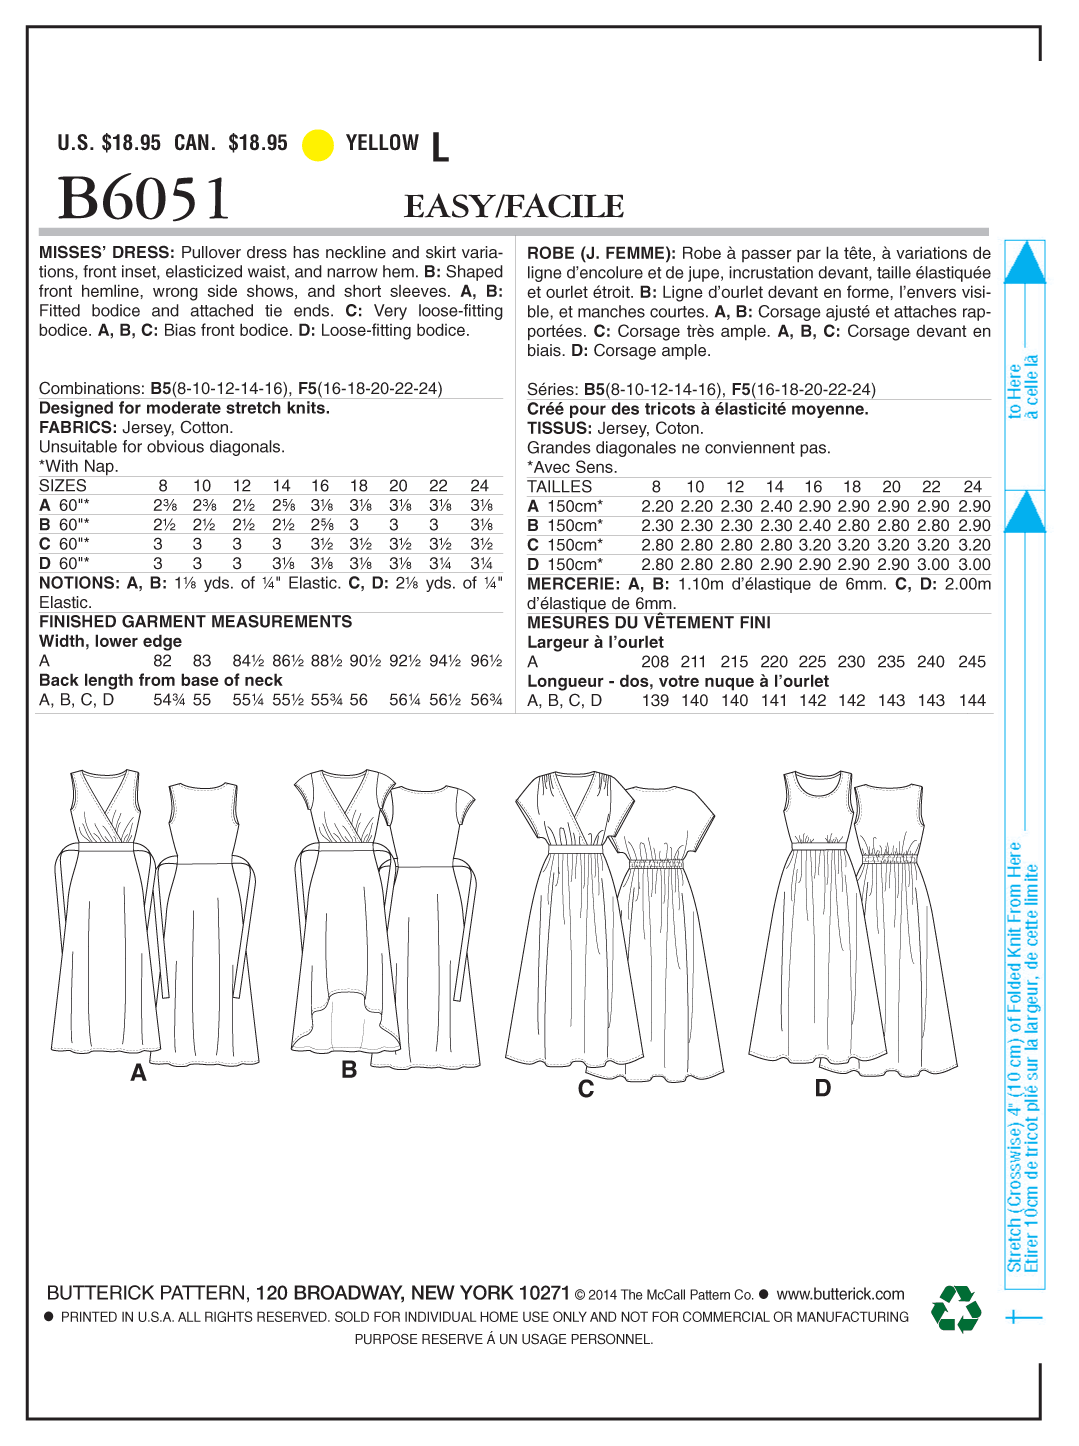 Butterick Sewing Pattern B6051 Misses' Dress